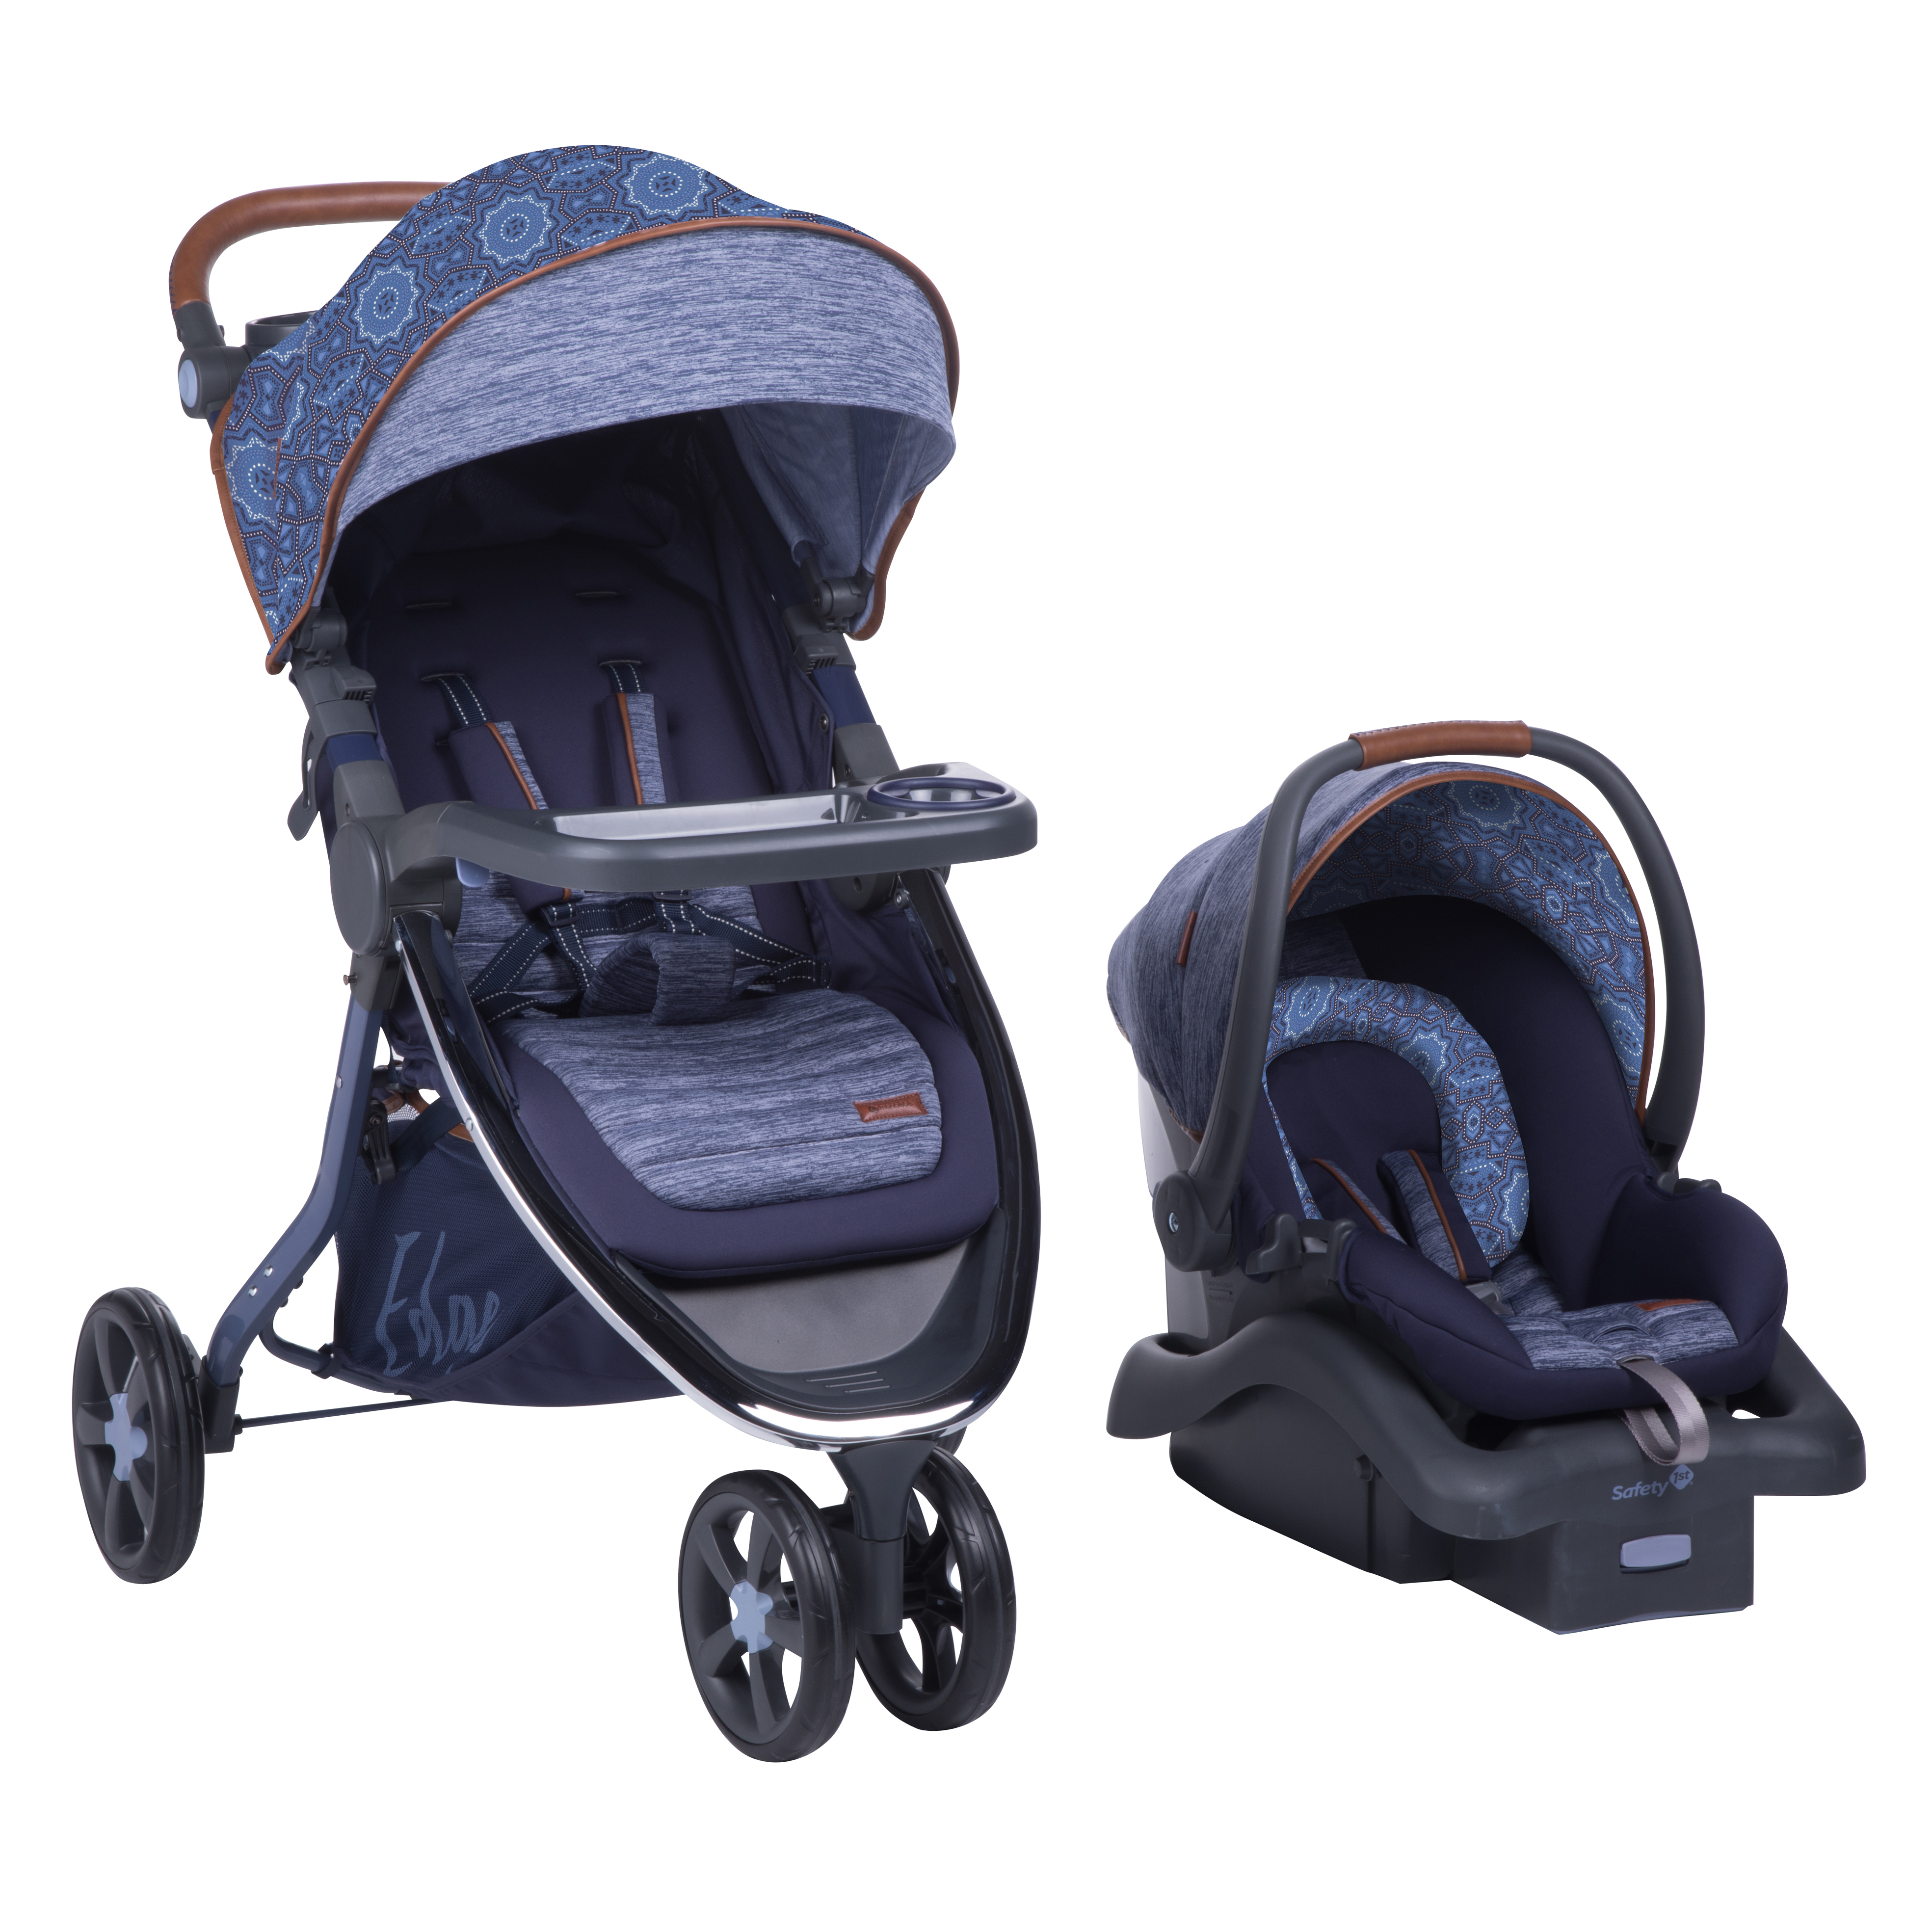 Monbebe Edge Travel System Stroller and Rear-Facing Infant Car Seat, Boho - image 1 of 13